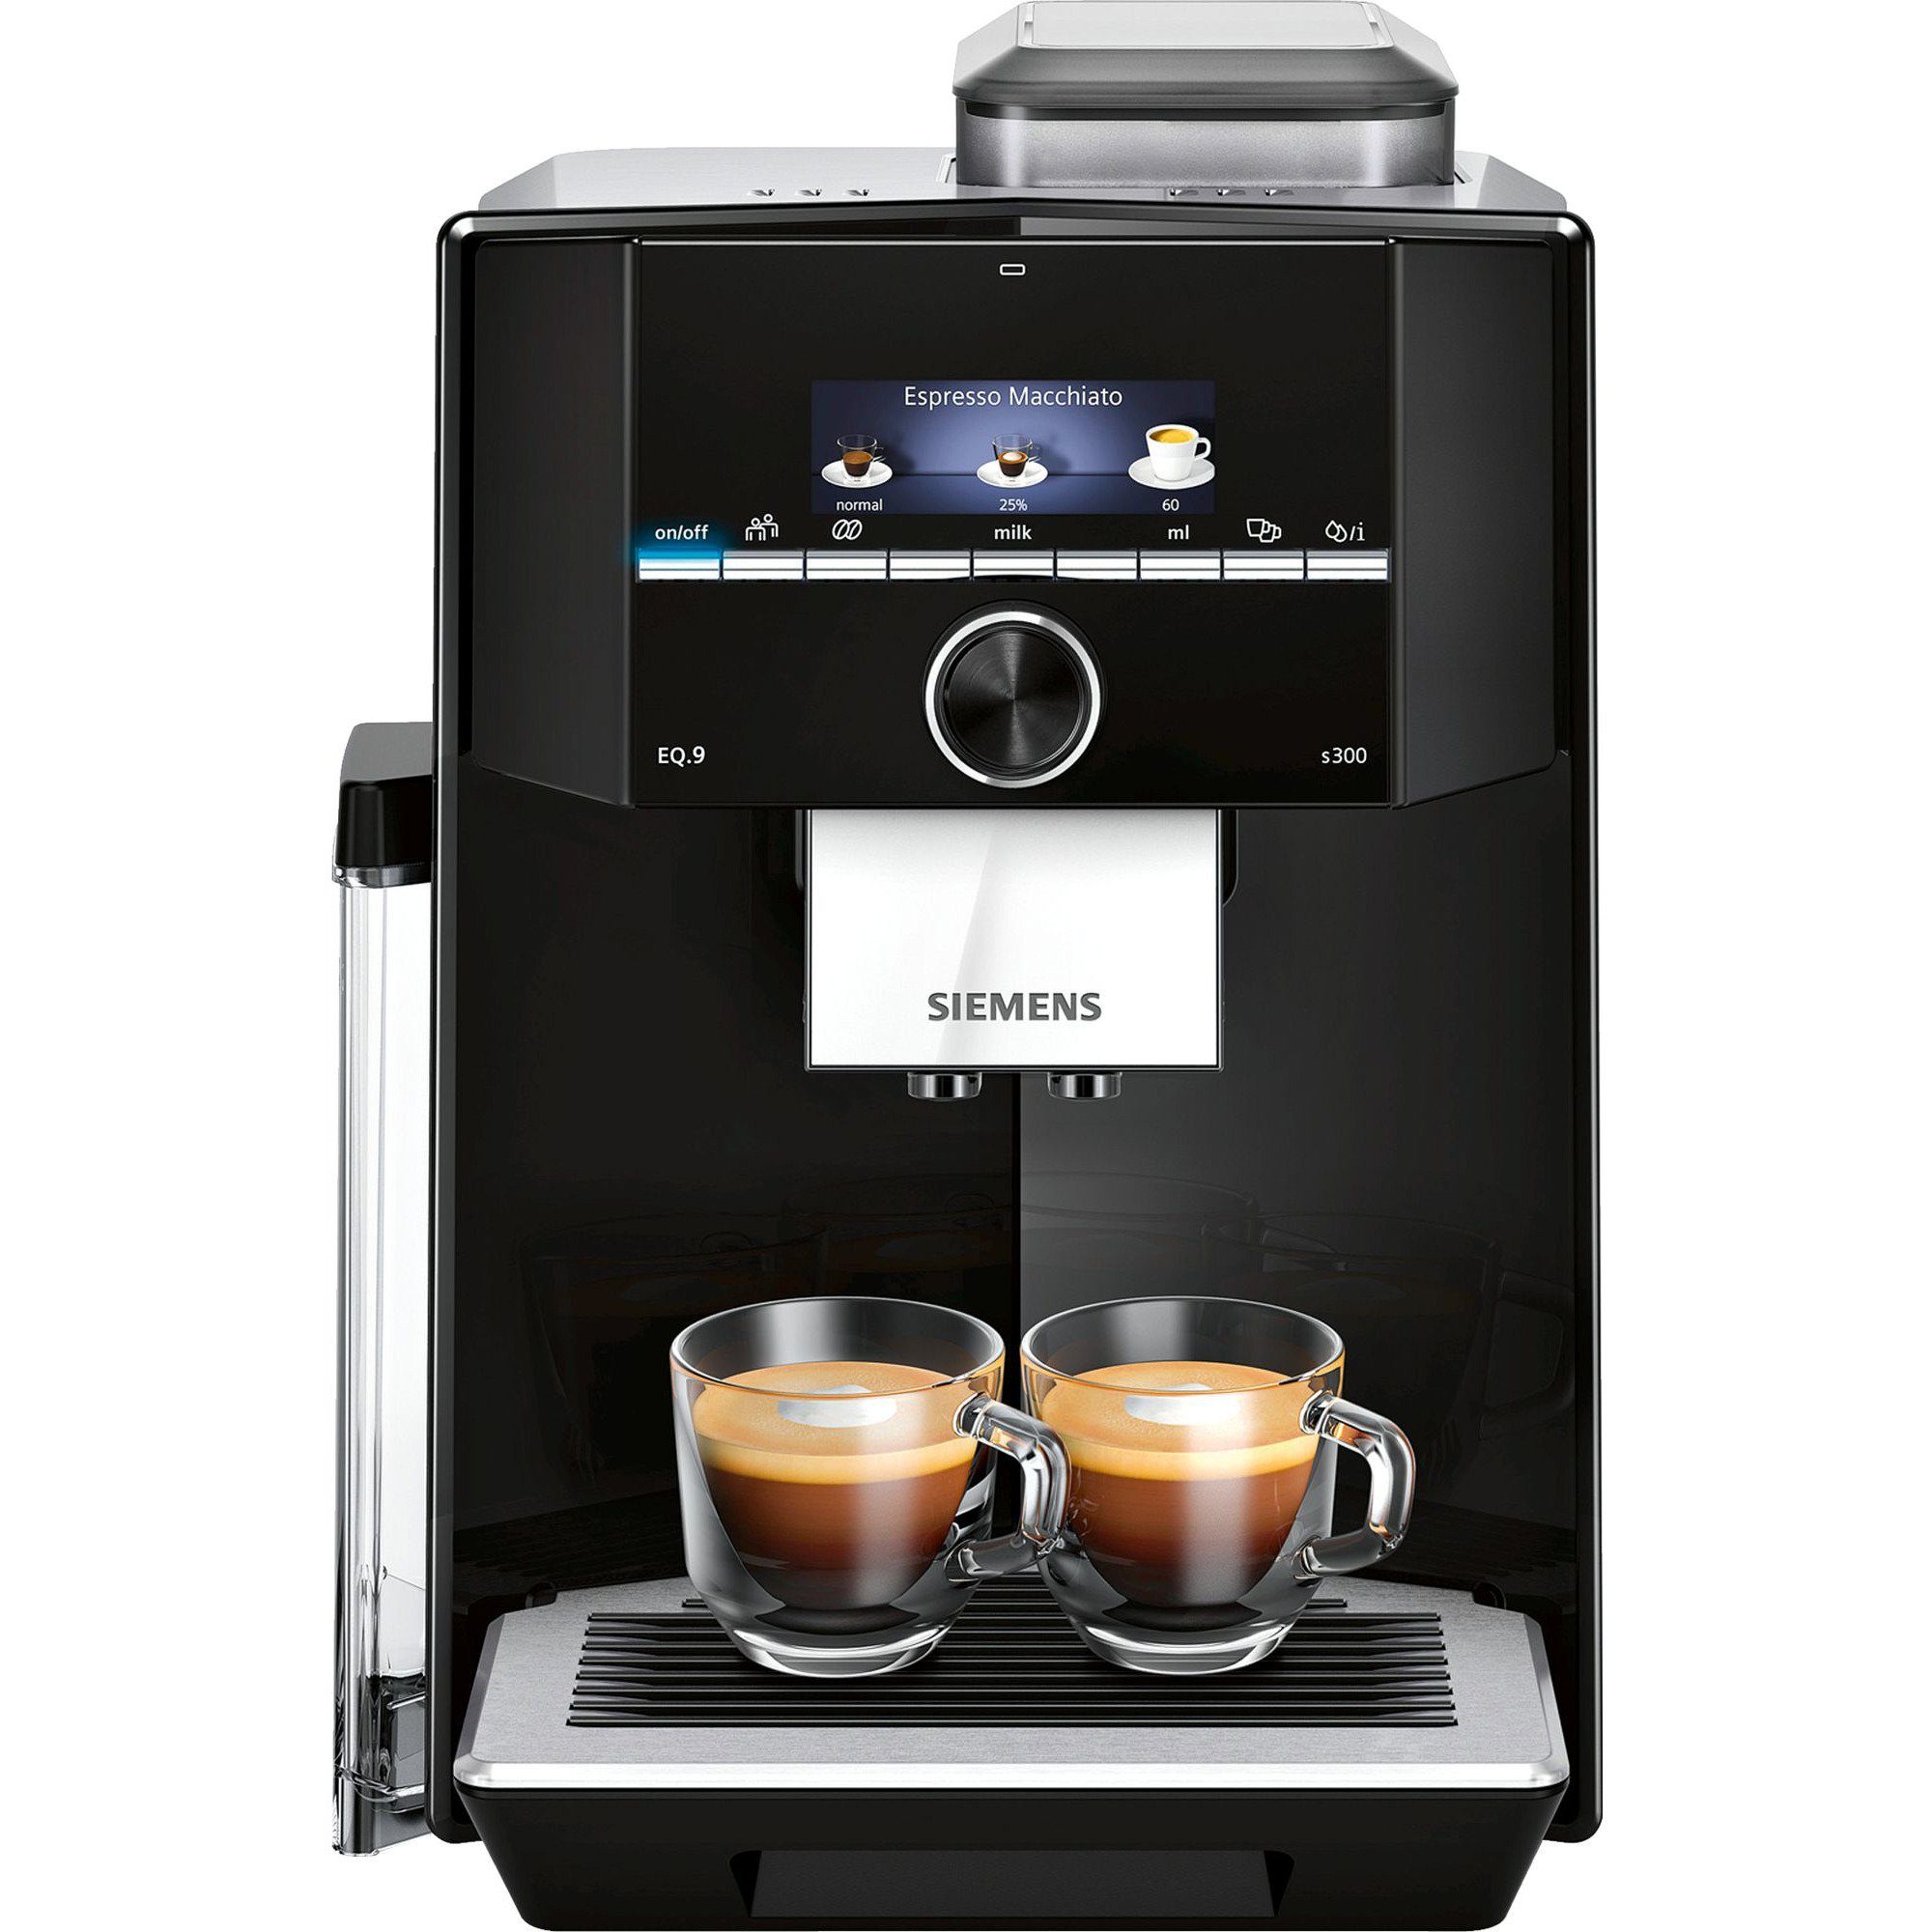 s300, Siemens TI923509DE EQ.9 SIEMENS Vollautomat Kaffeebereiter